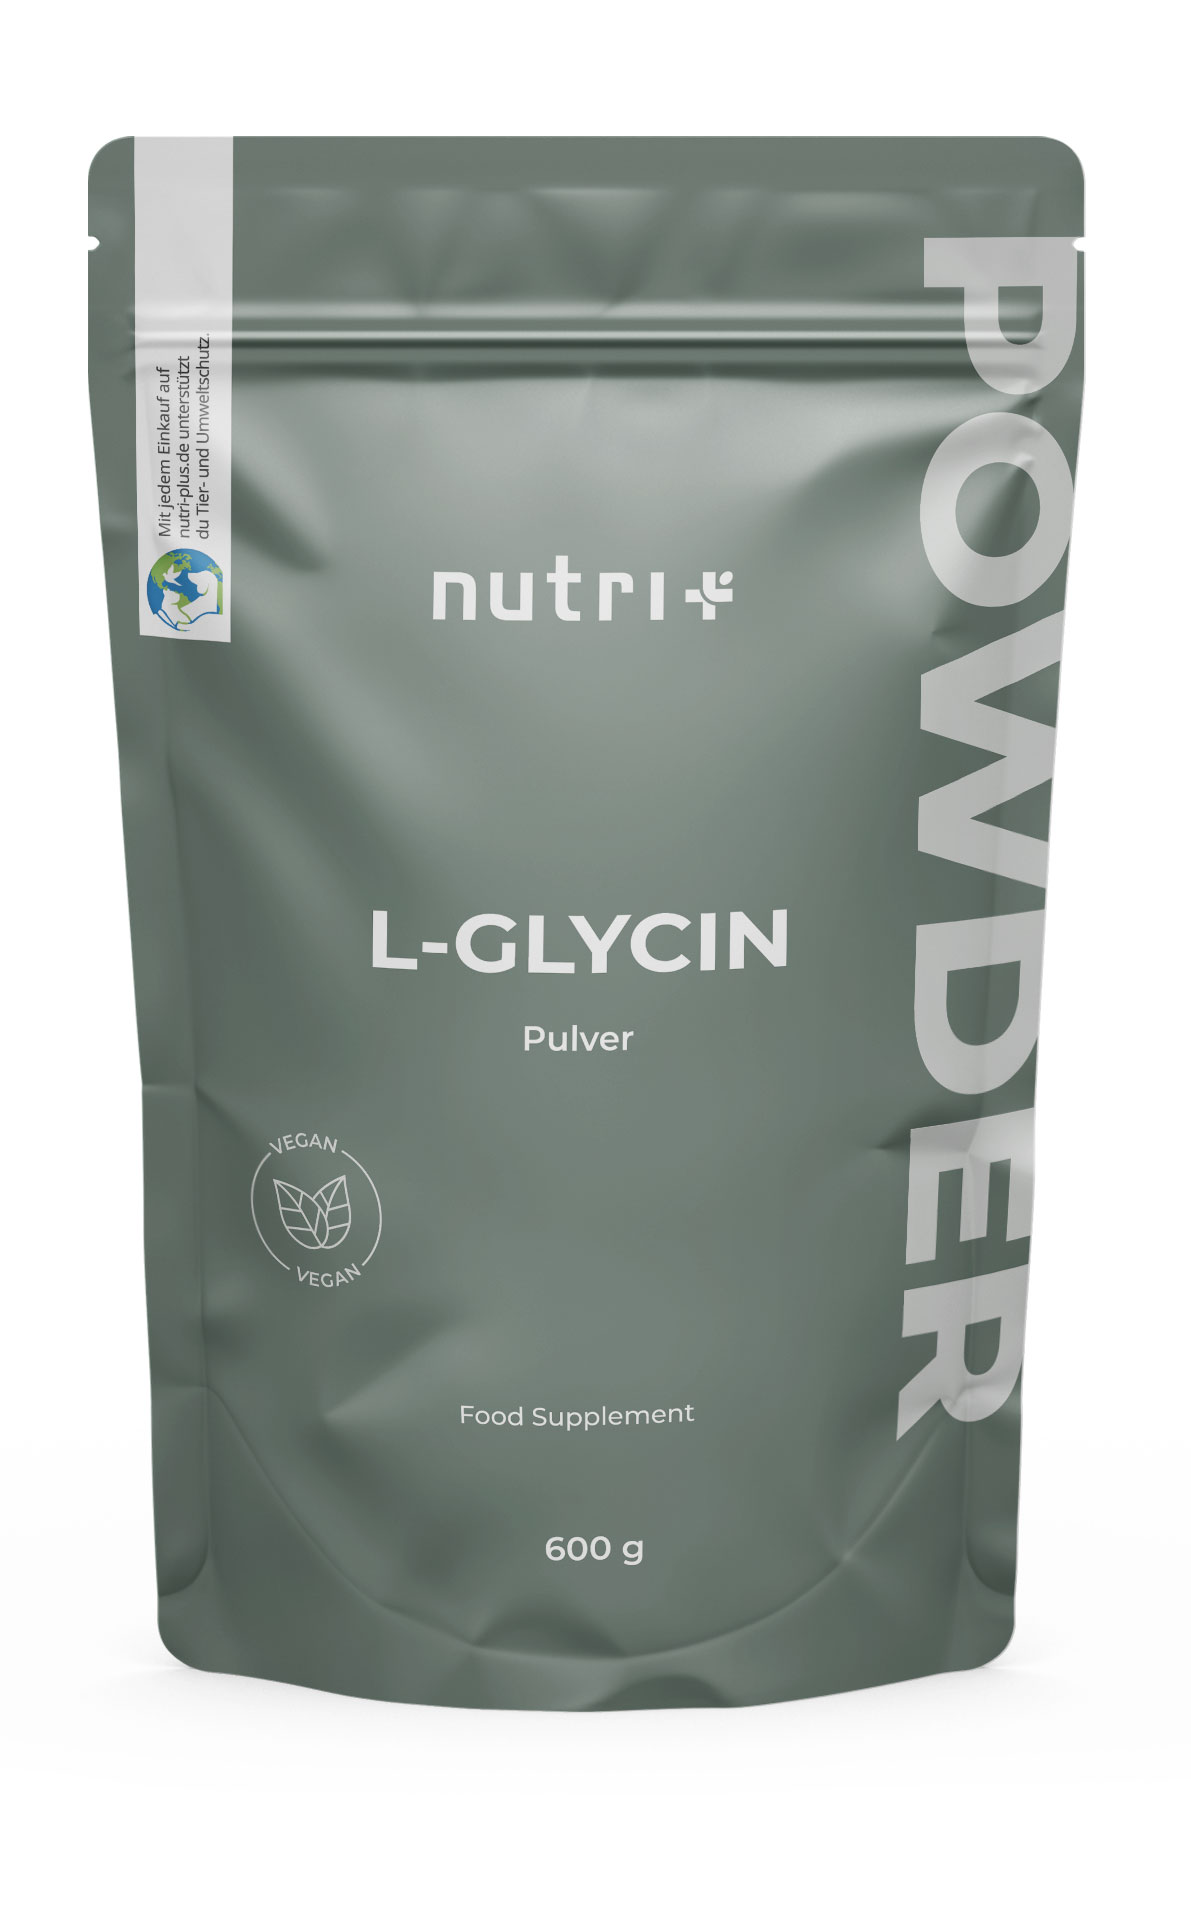 nutri+ L-Glycin Pulver | 600g